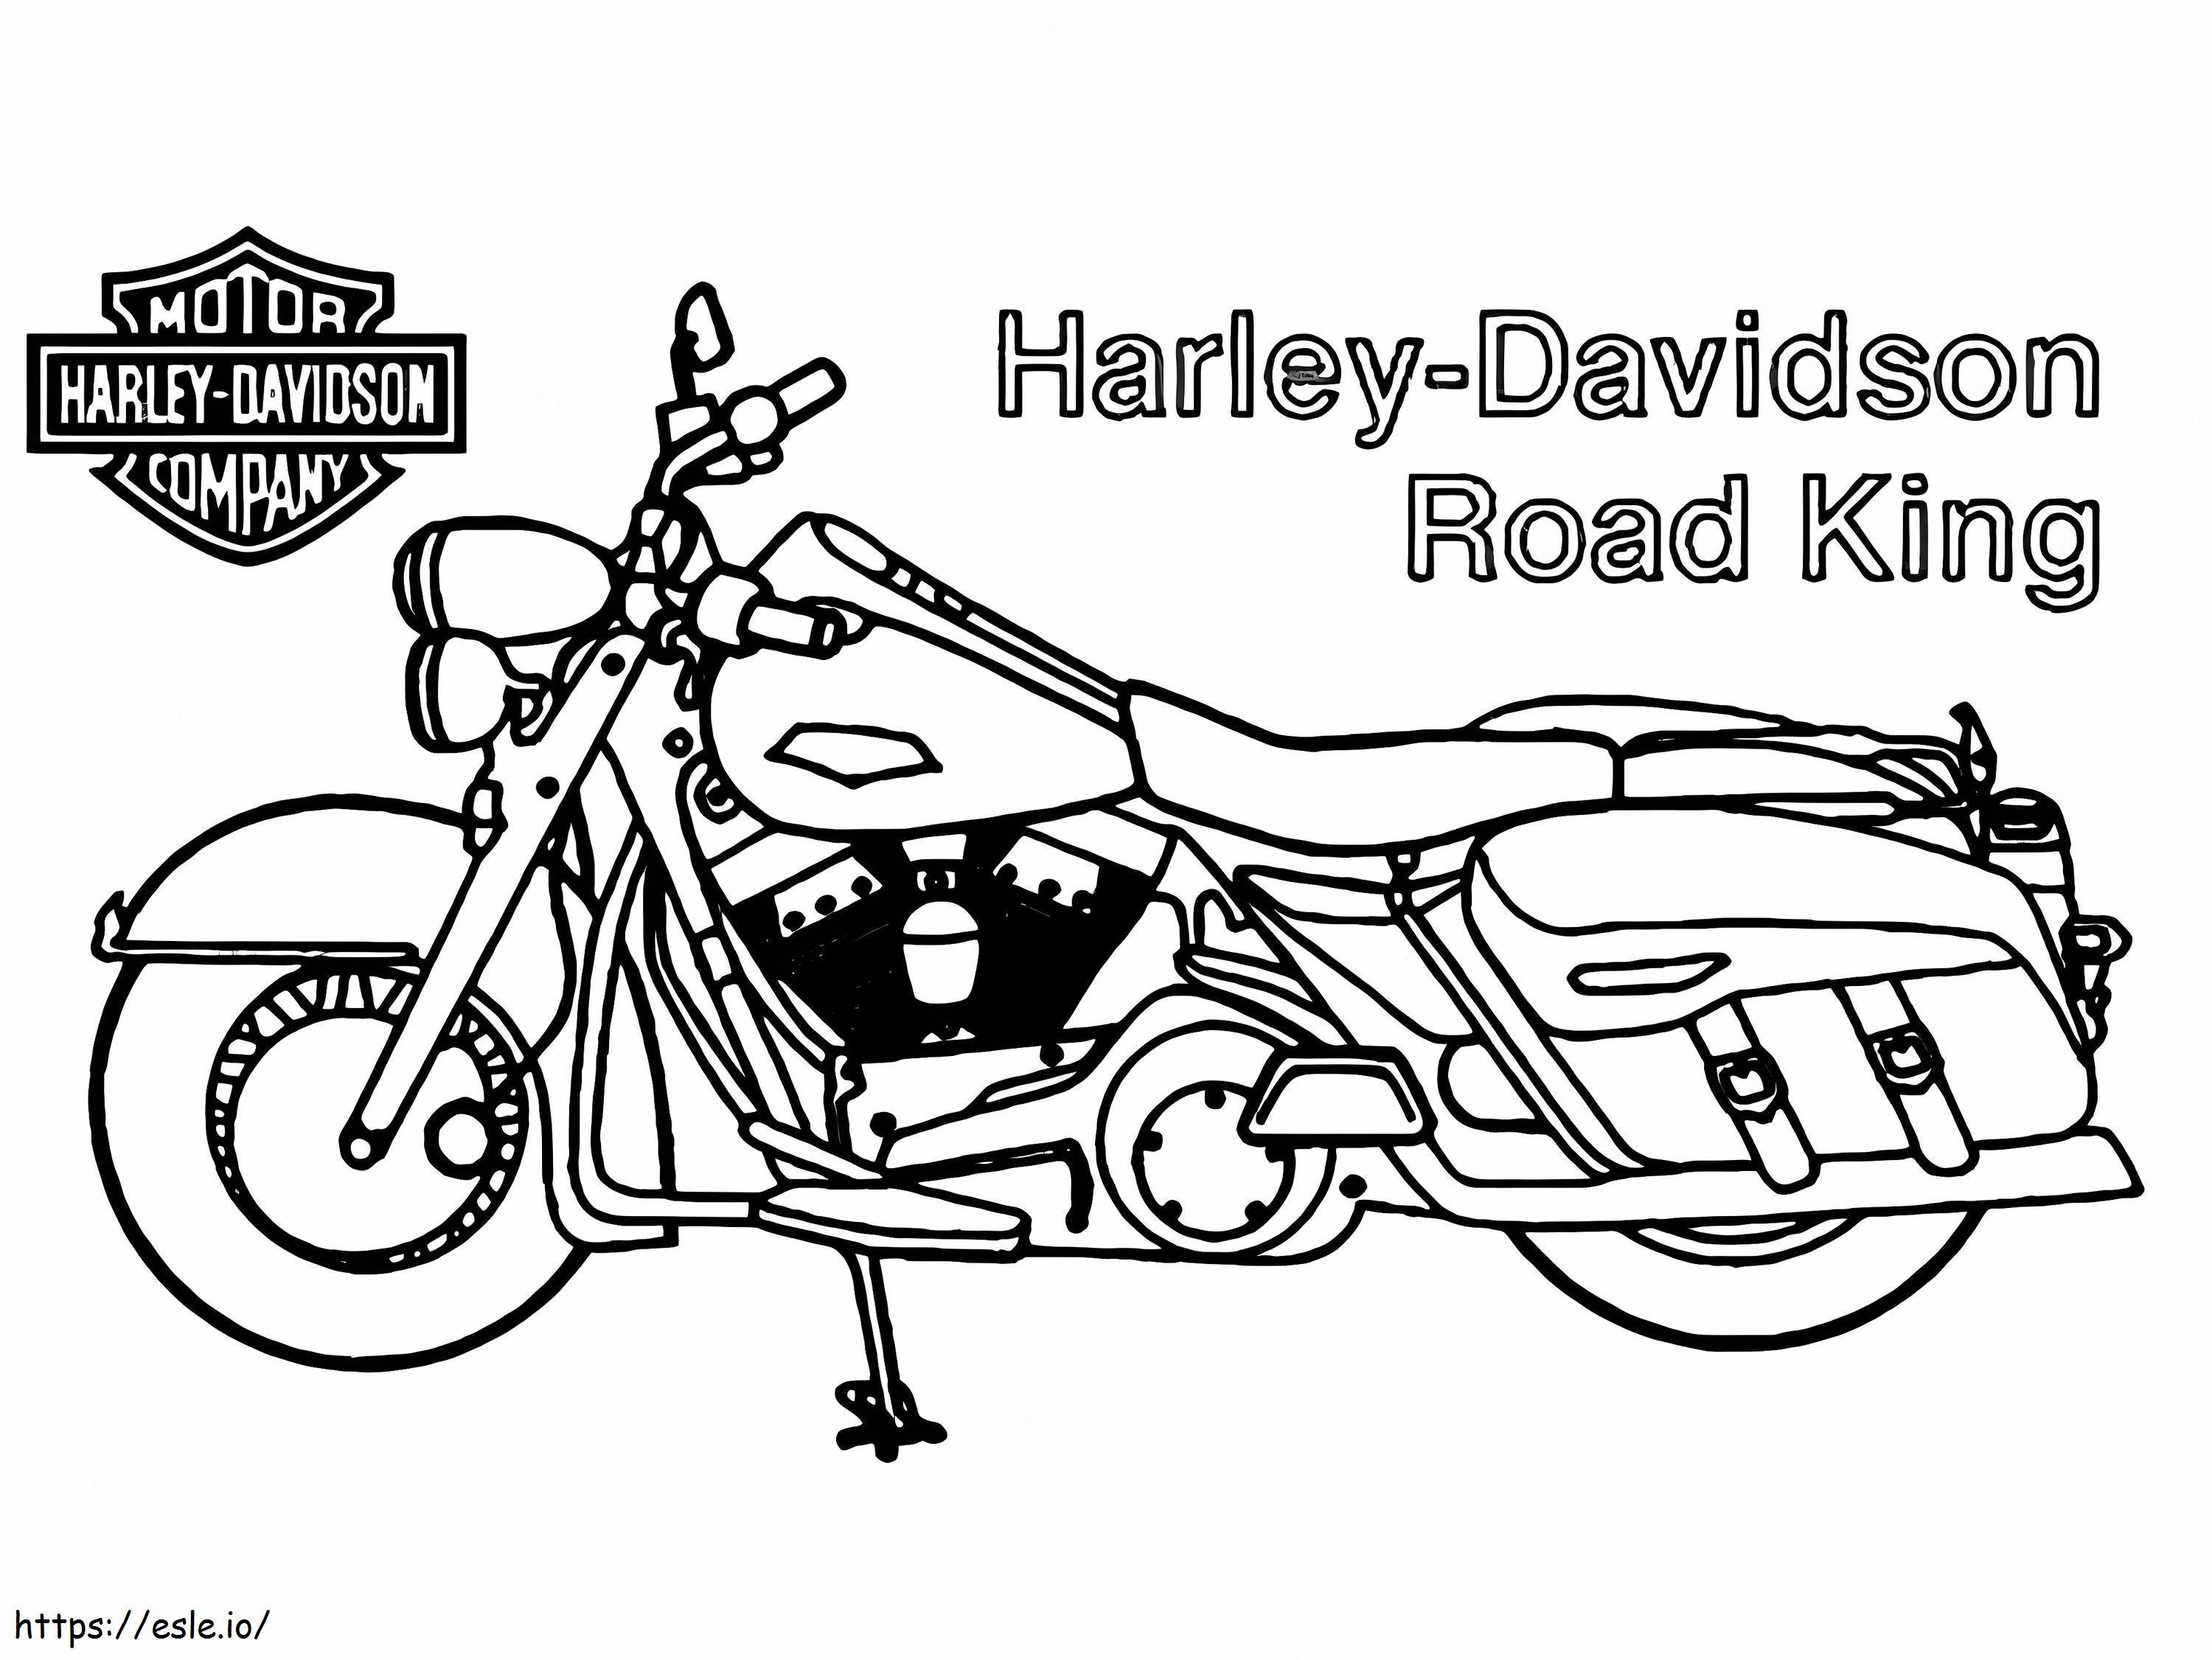 Harley Davidson Road King 1 coloring page